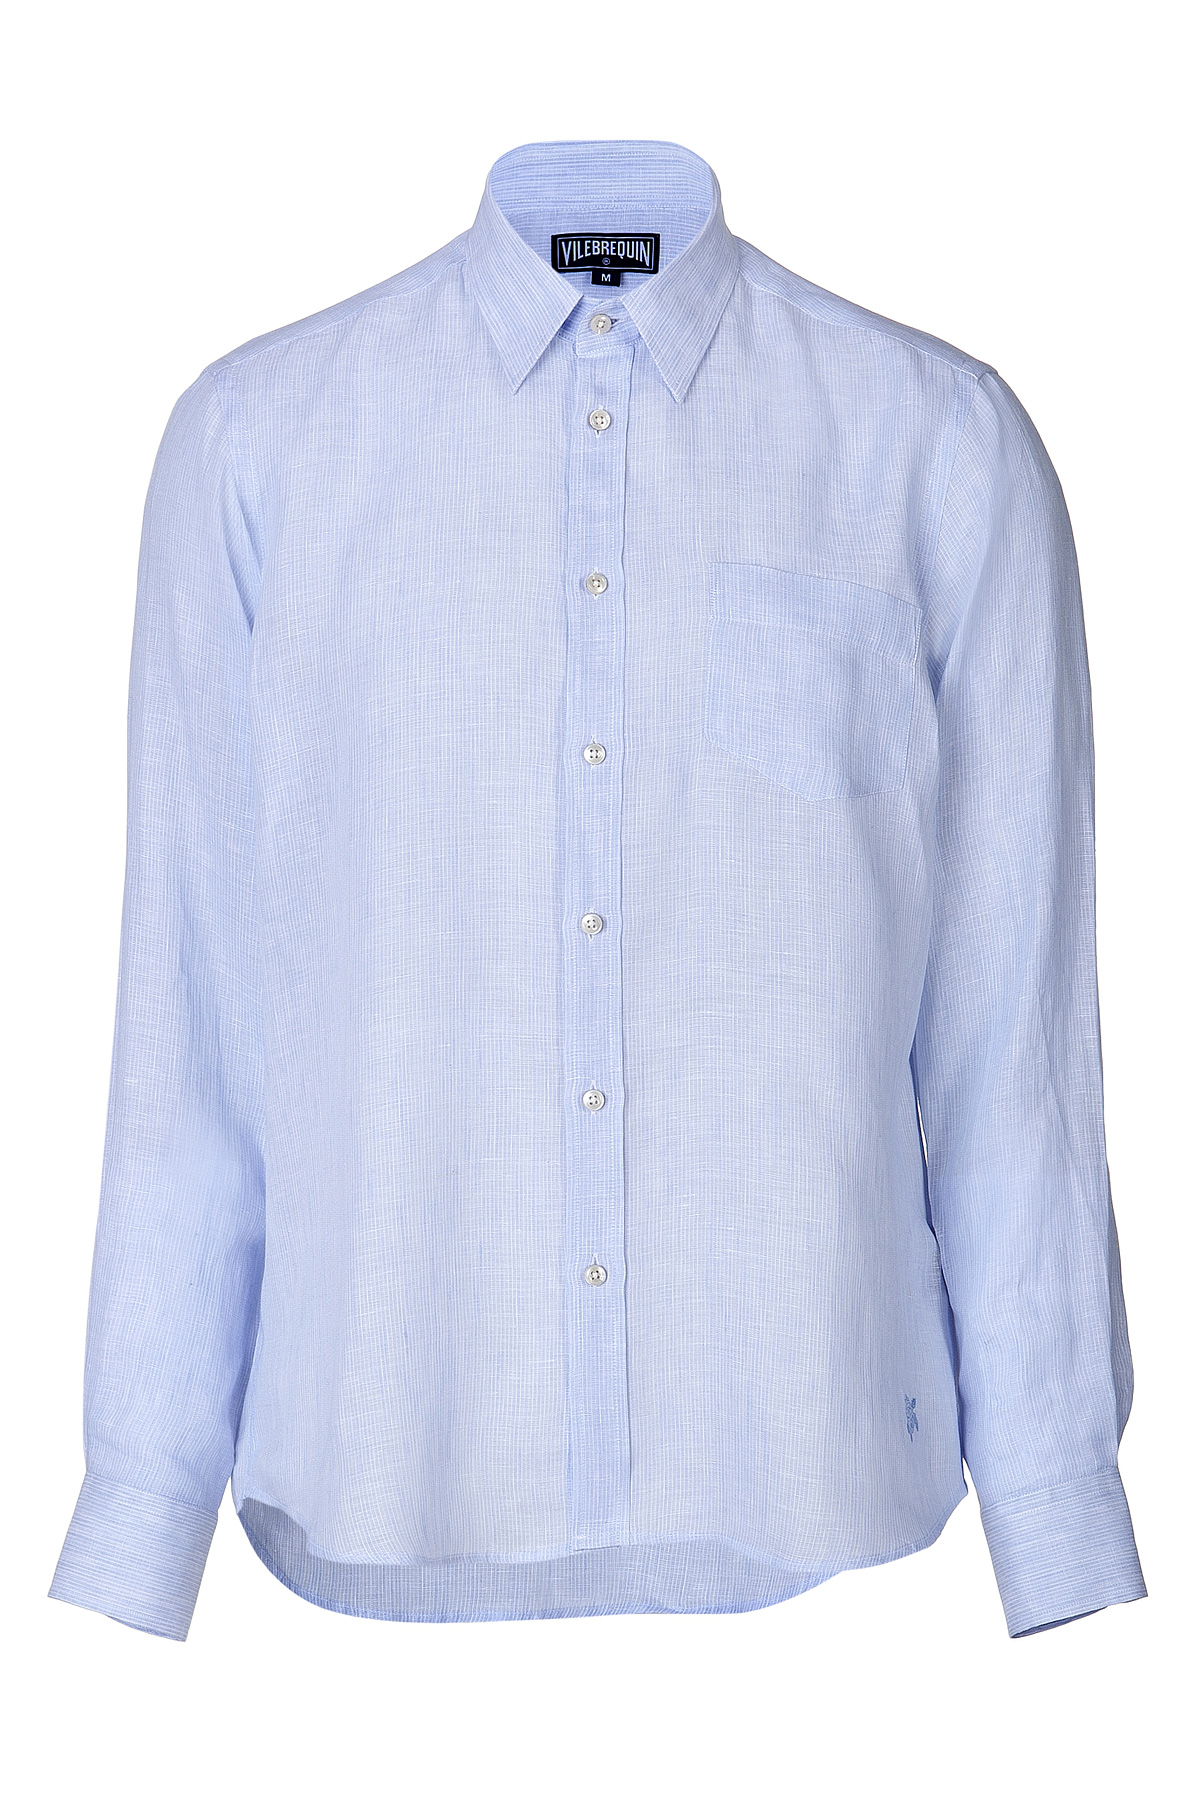 Lyst - Vilebrequin Linen-flax Carrix Shirt - Blue in Blue for Men